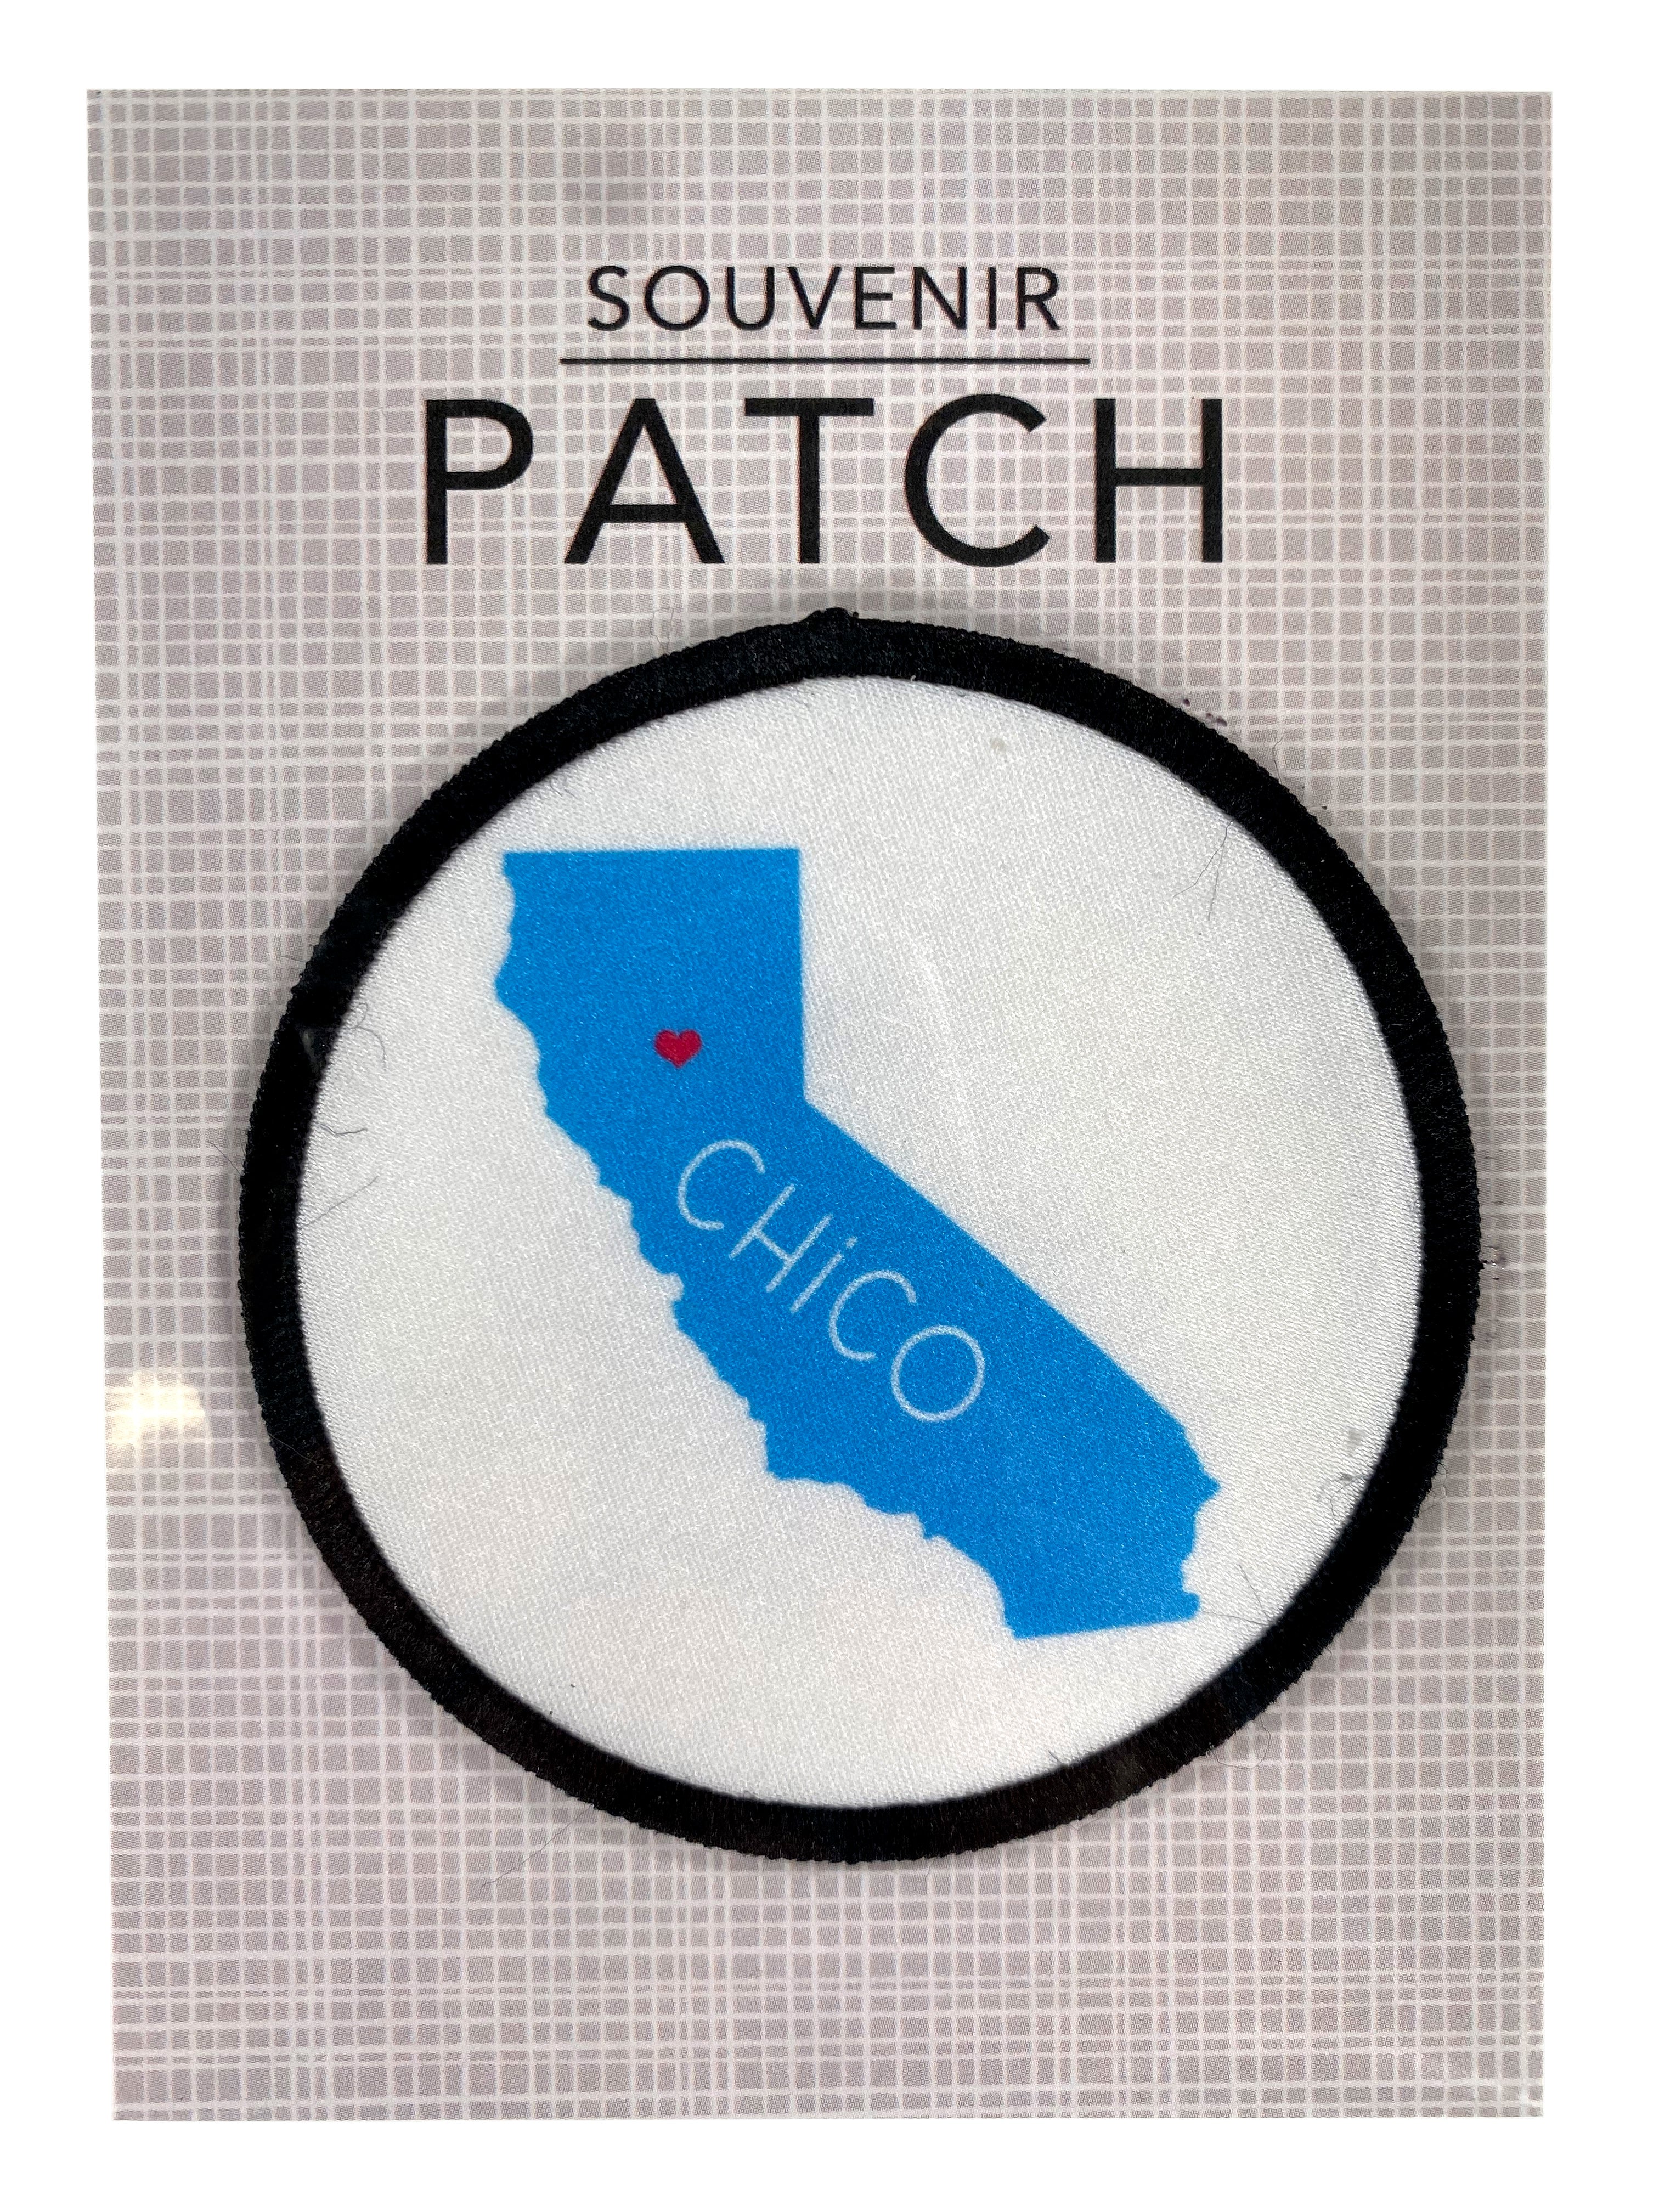 Chico Patch - Cali Love    